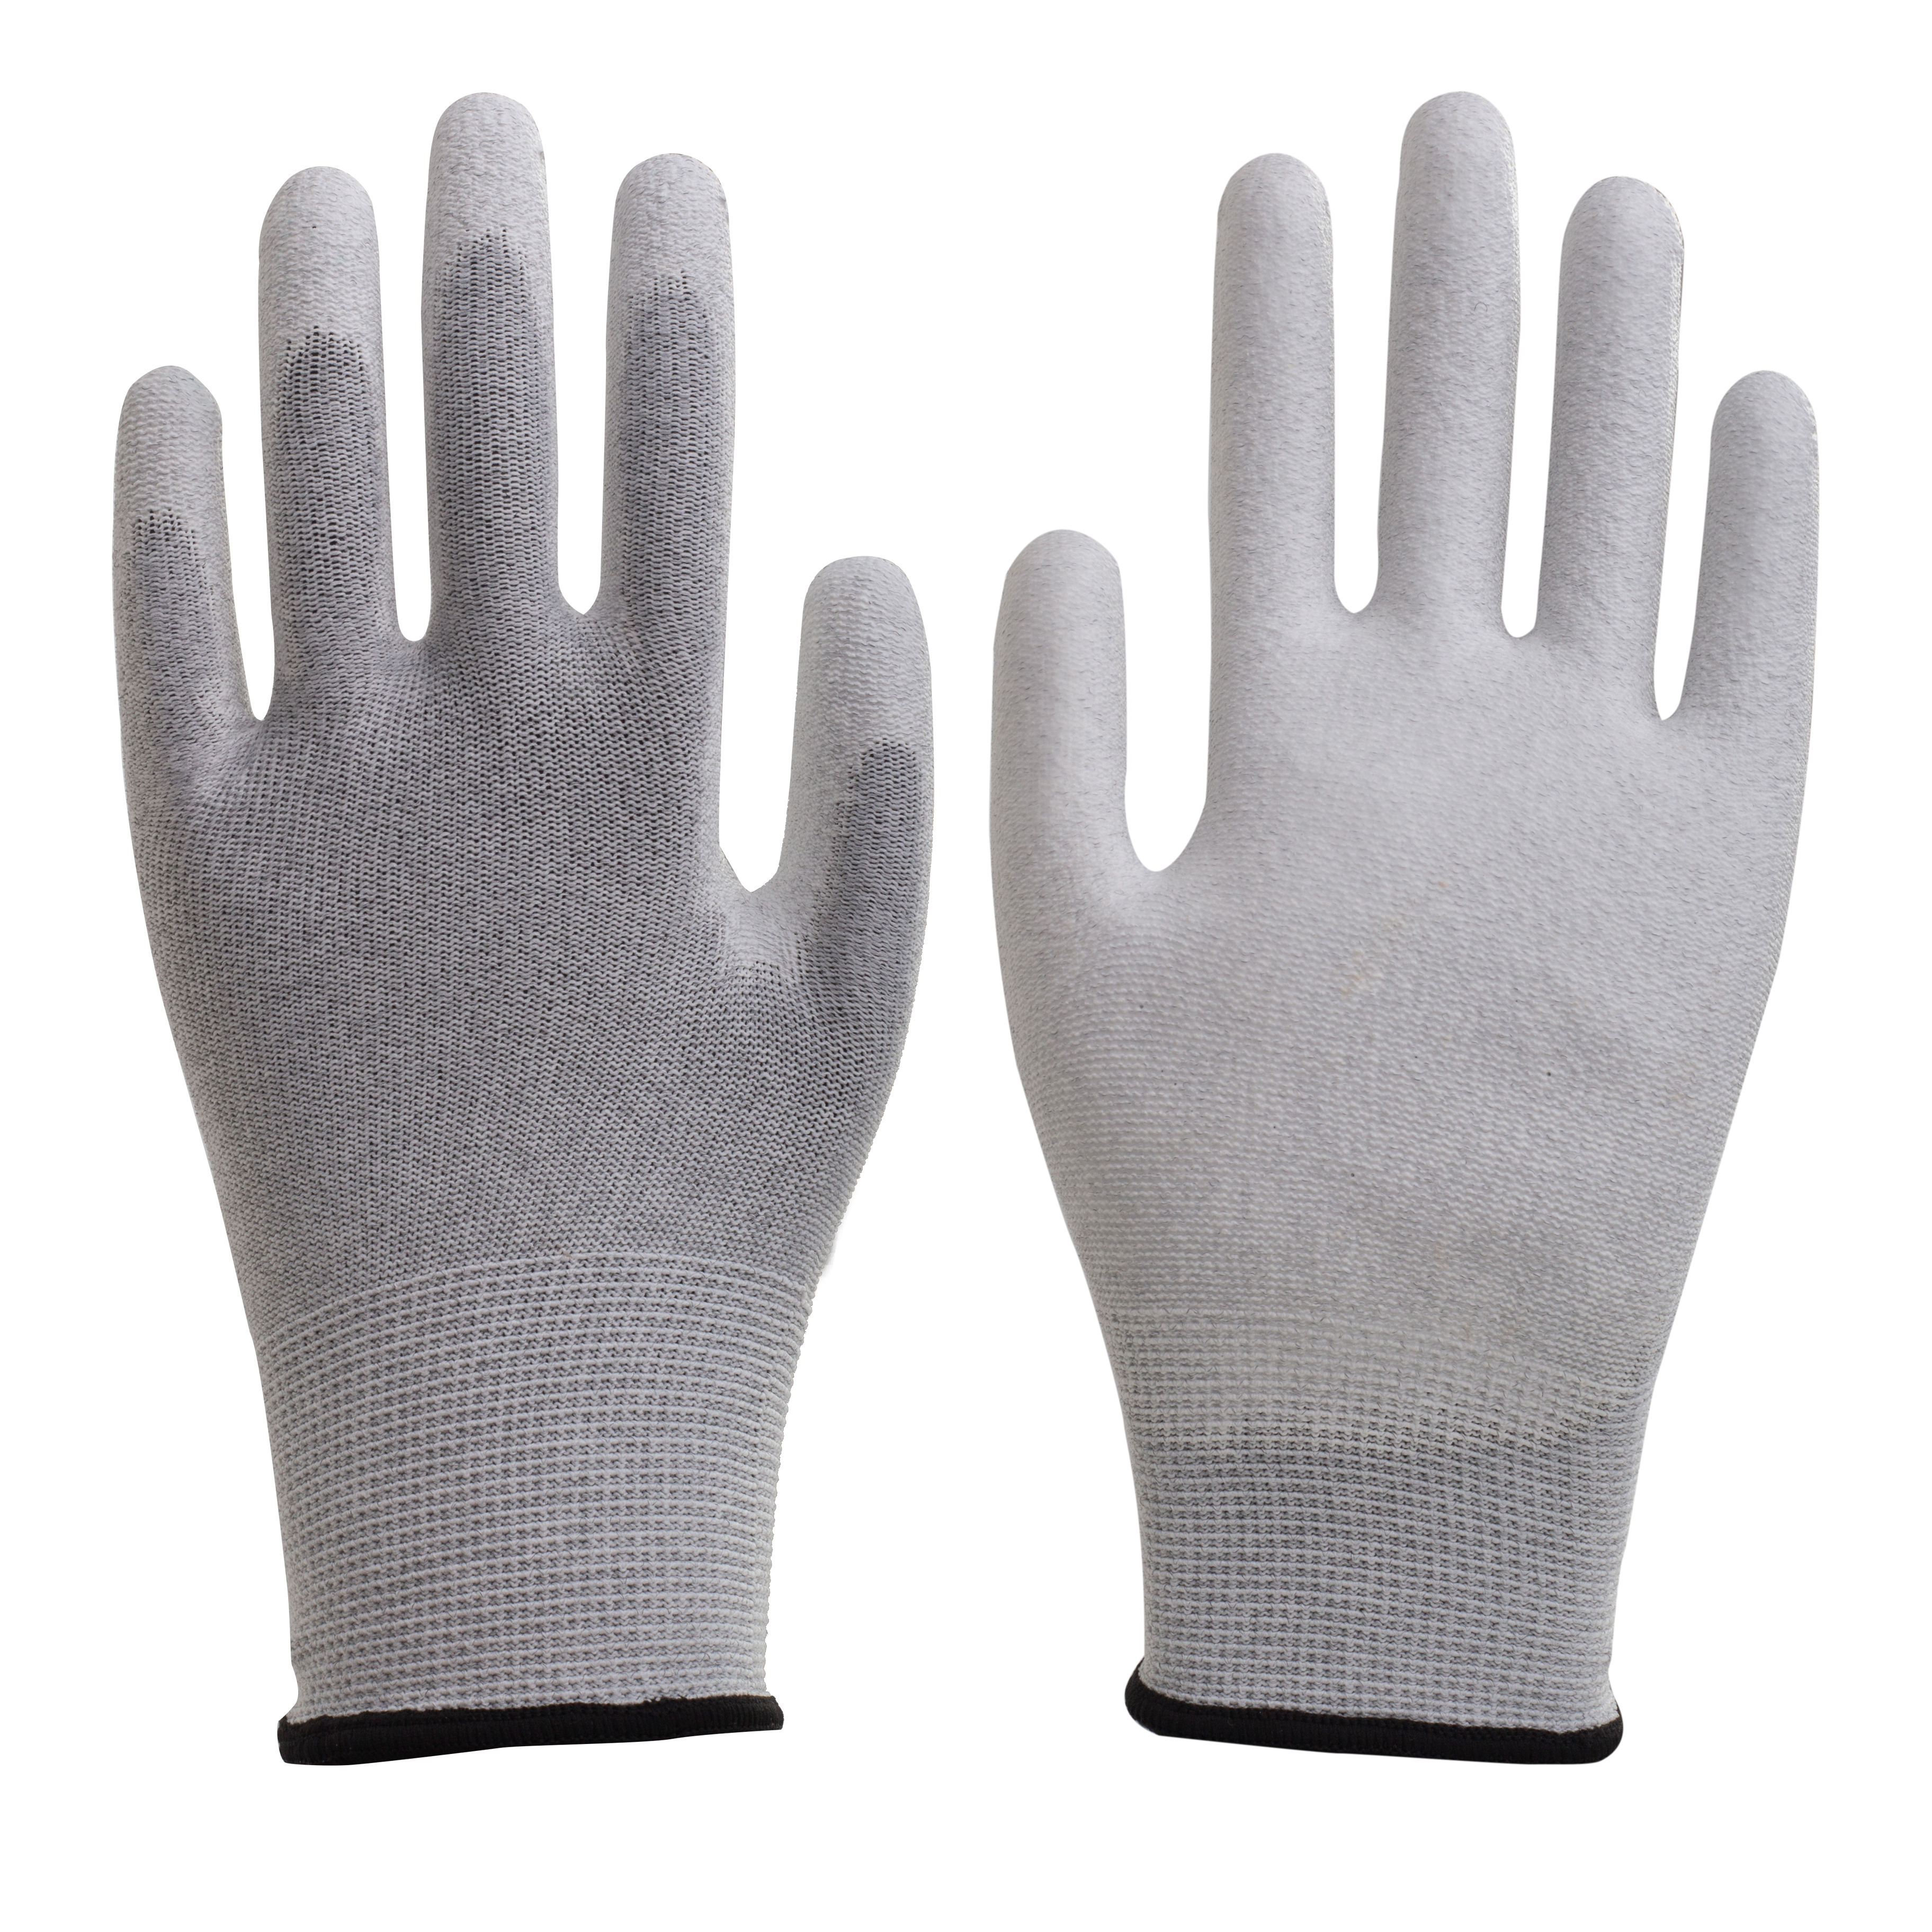 13G nylon & carbon fiber ESD gloves PU palm coated 